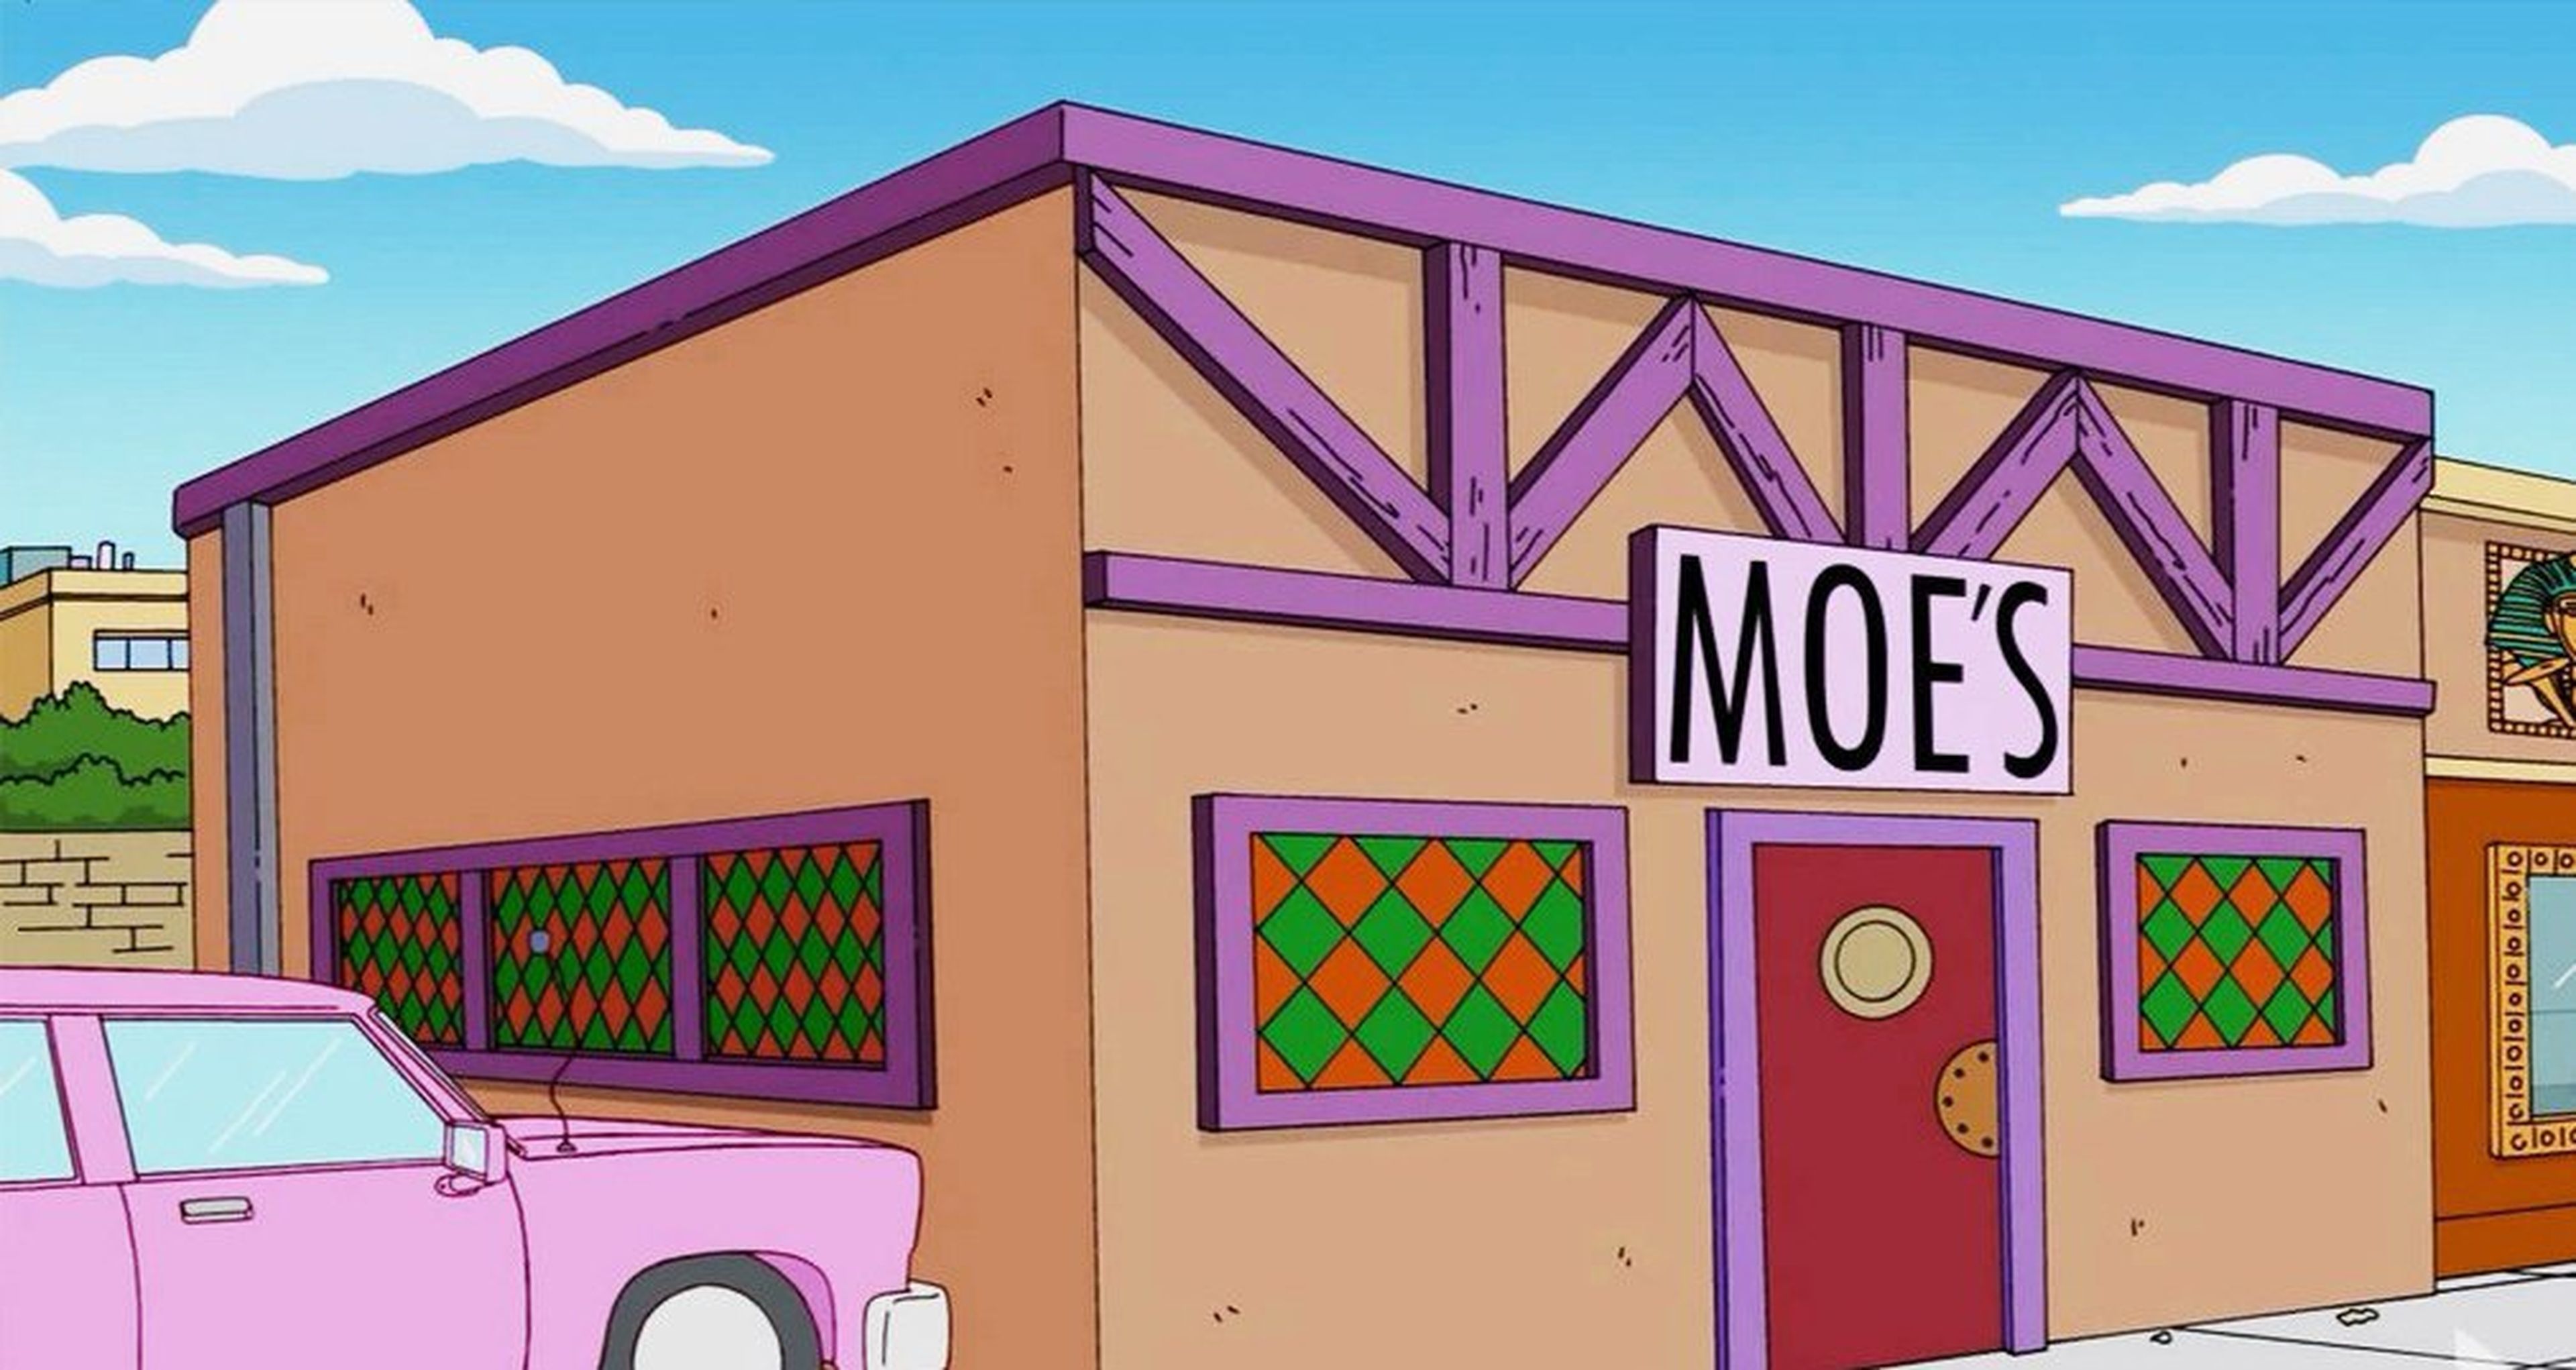 Una empresa crea una Taberna de Moe hinchable